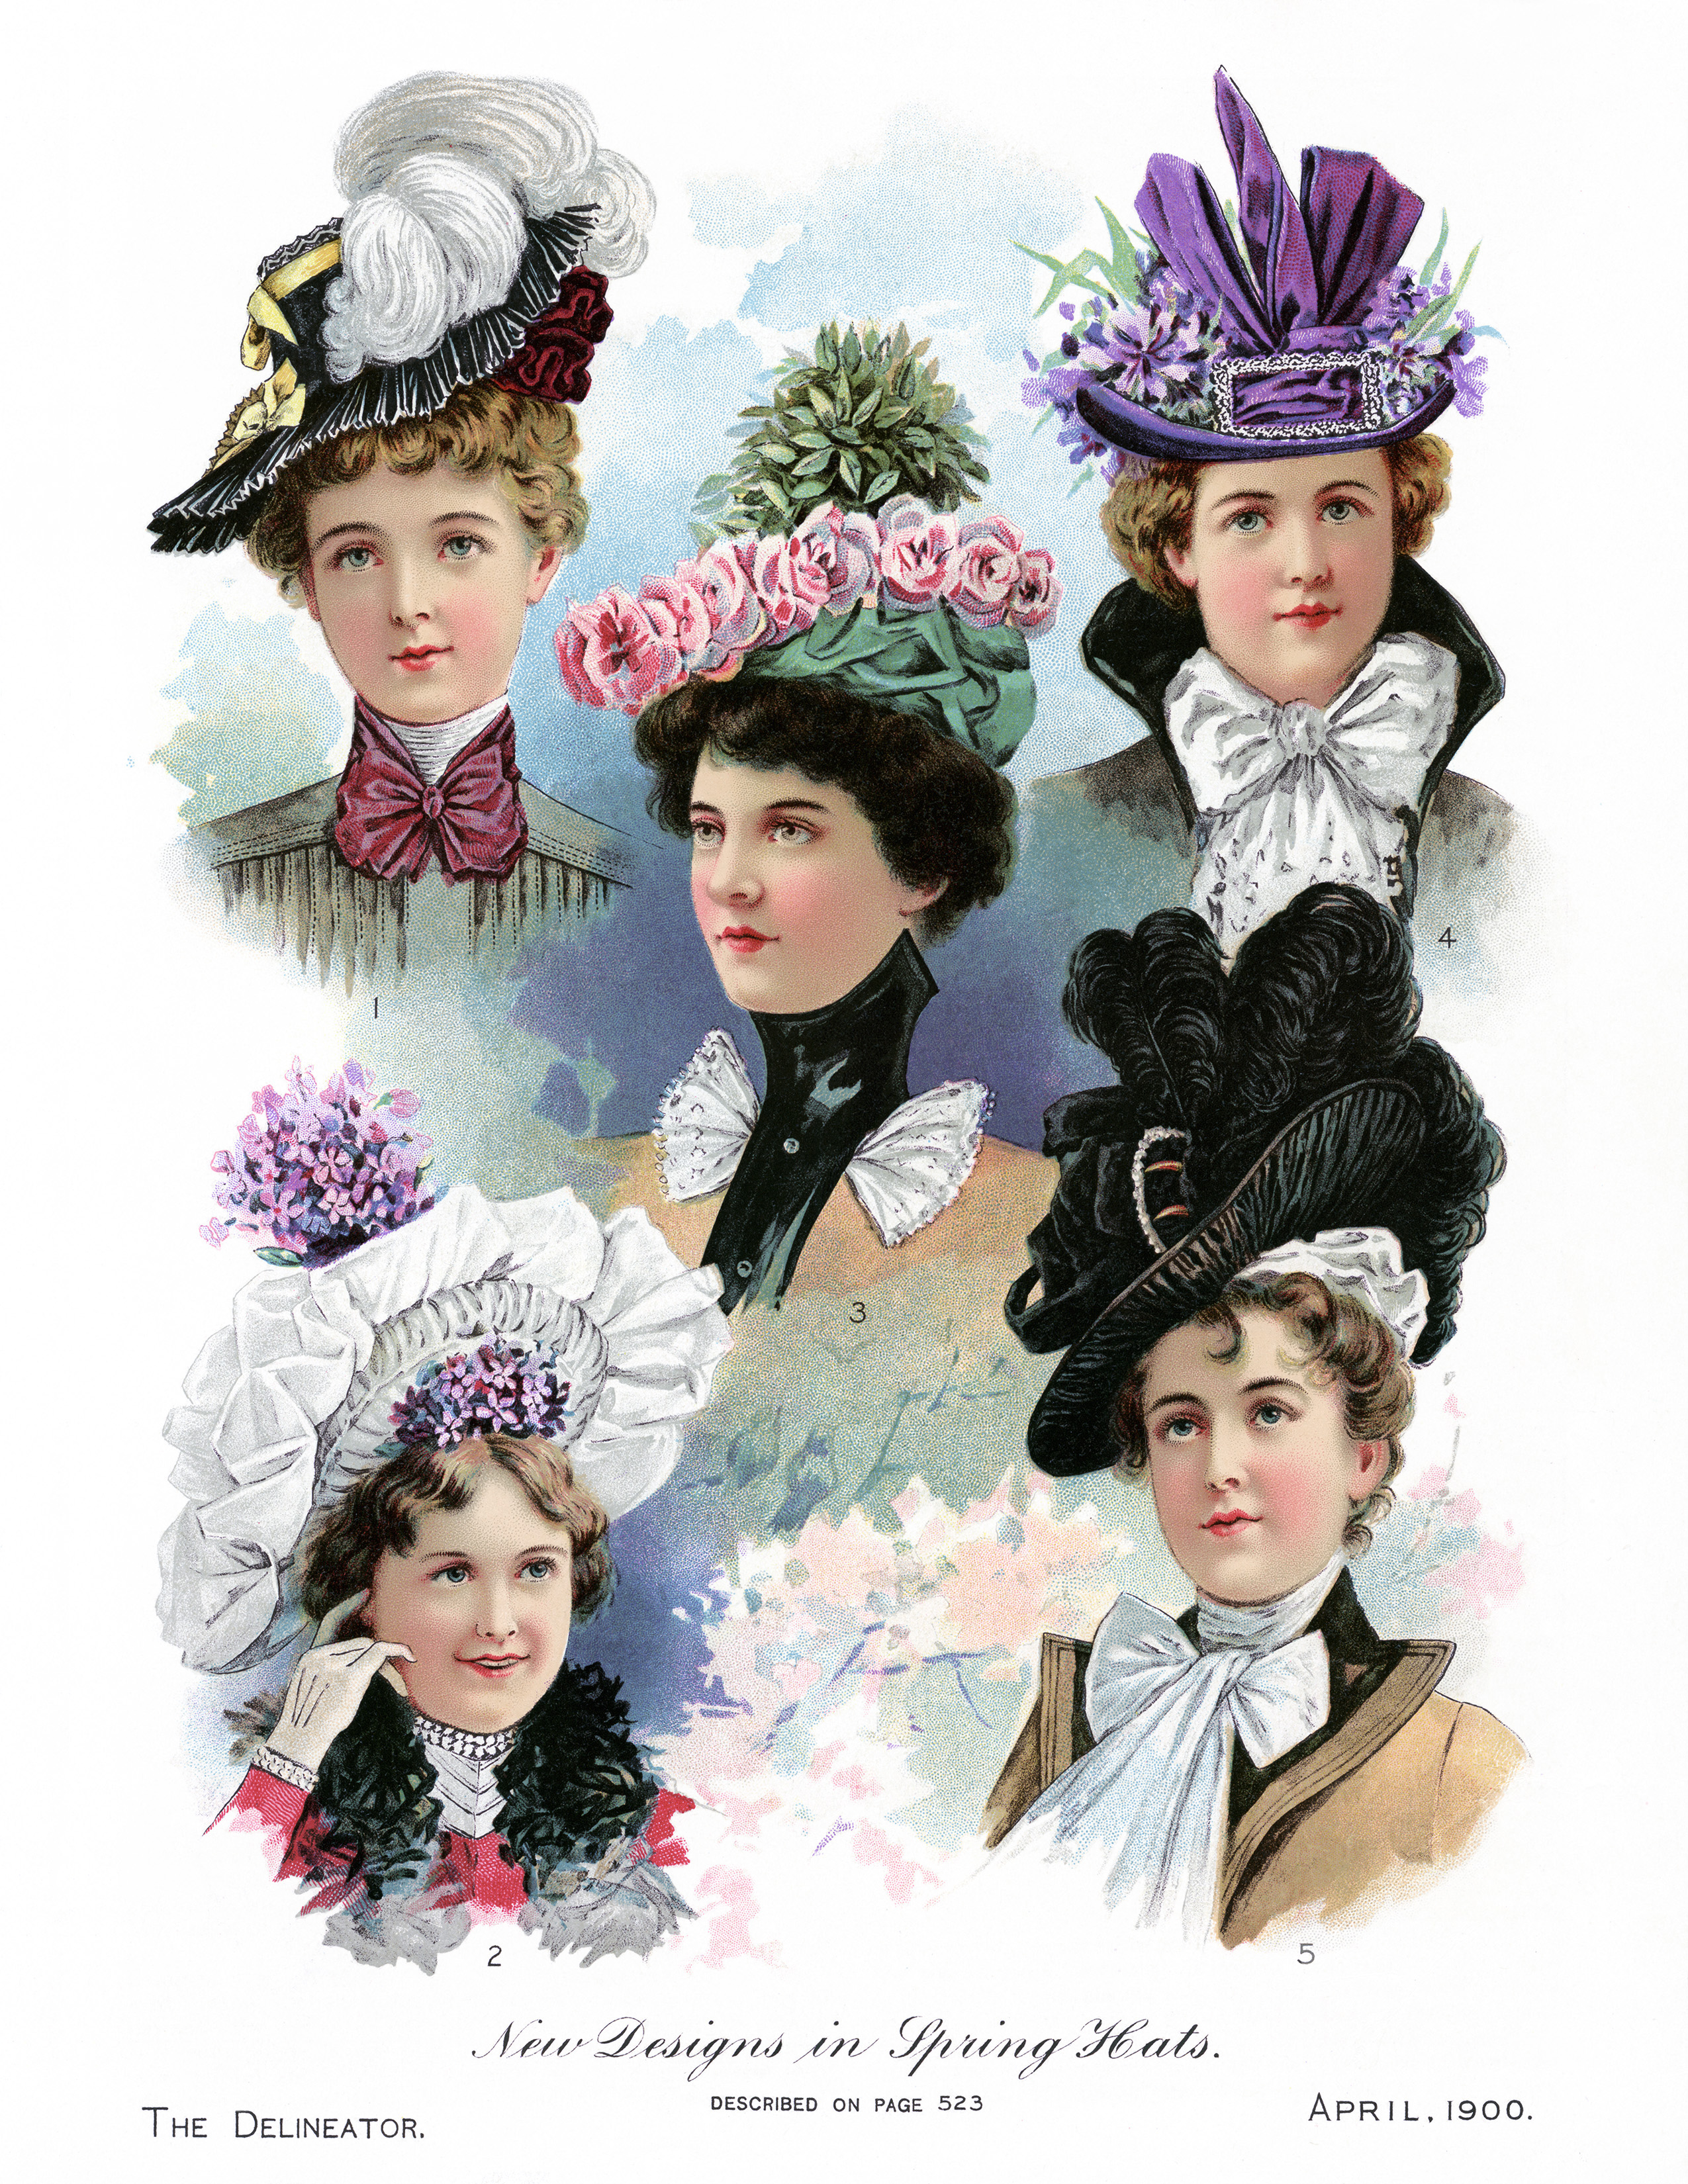 Victorian hat clipart, vintage fashion image, elegant hat illustration, free digital graphics, antique ladies hat